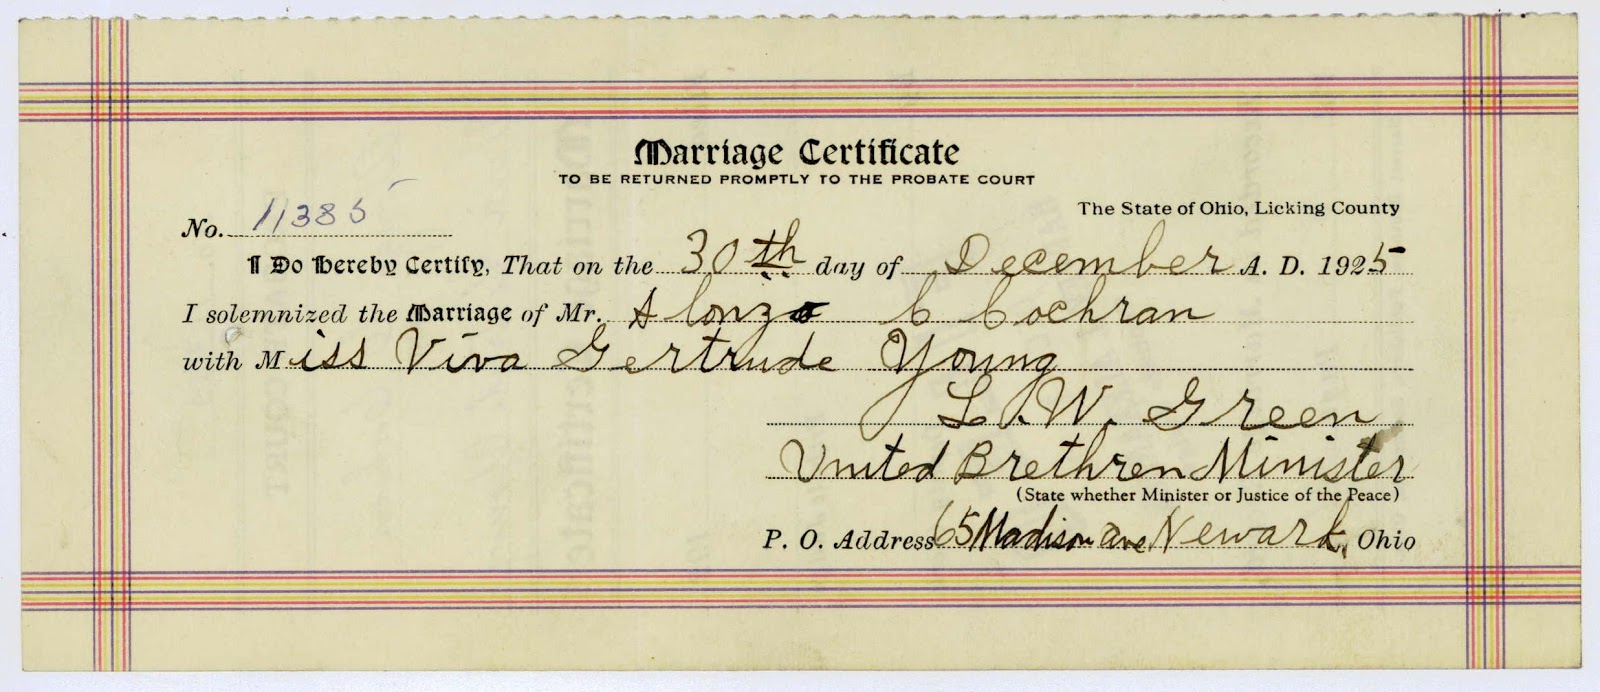 Free Marriage License Records Columbus Ohio - pharmacygugu